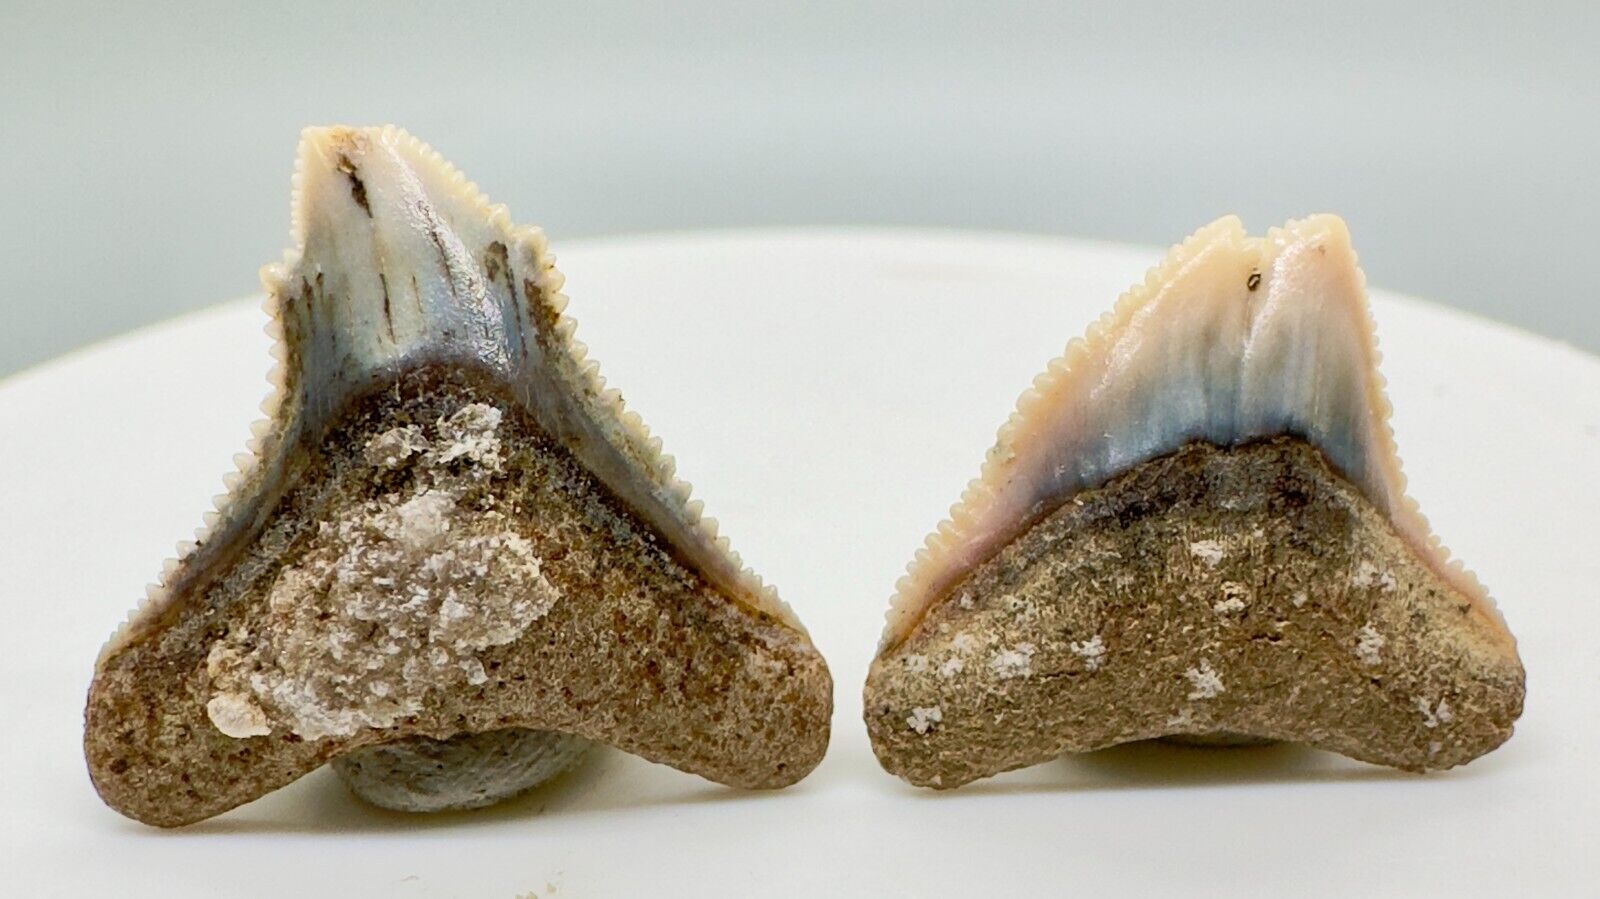 Pair of Deformed, Split-tip Serrated Fossil DUSKY SHARK Teeth - Sacaco, Peru